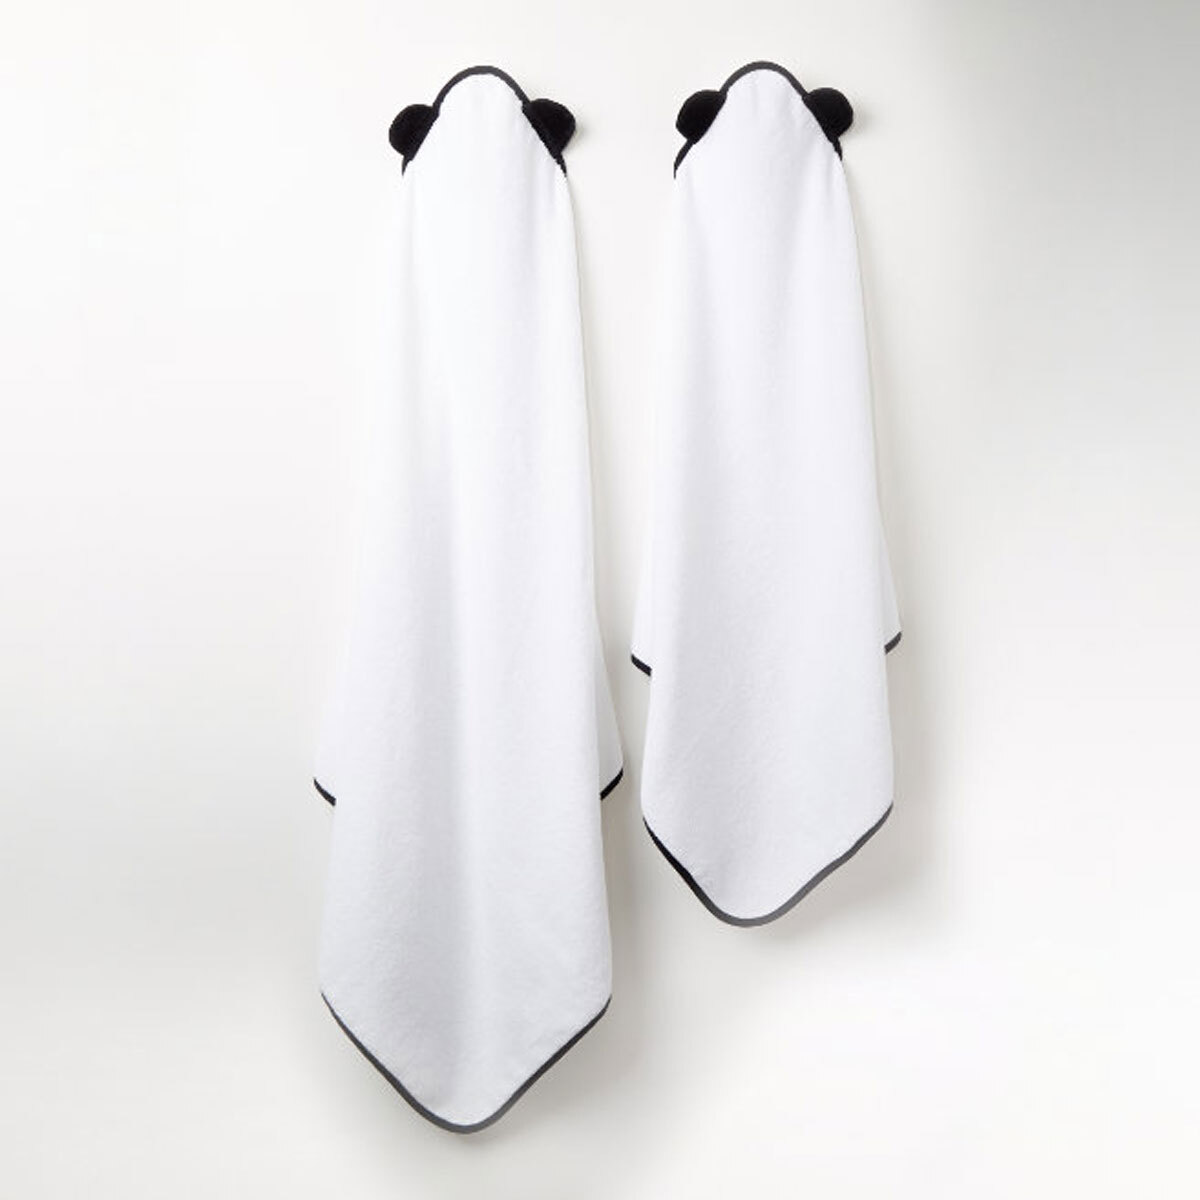 Panda Bamboo Hooded Towel in 2 Sizes